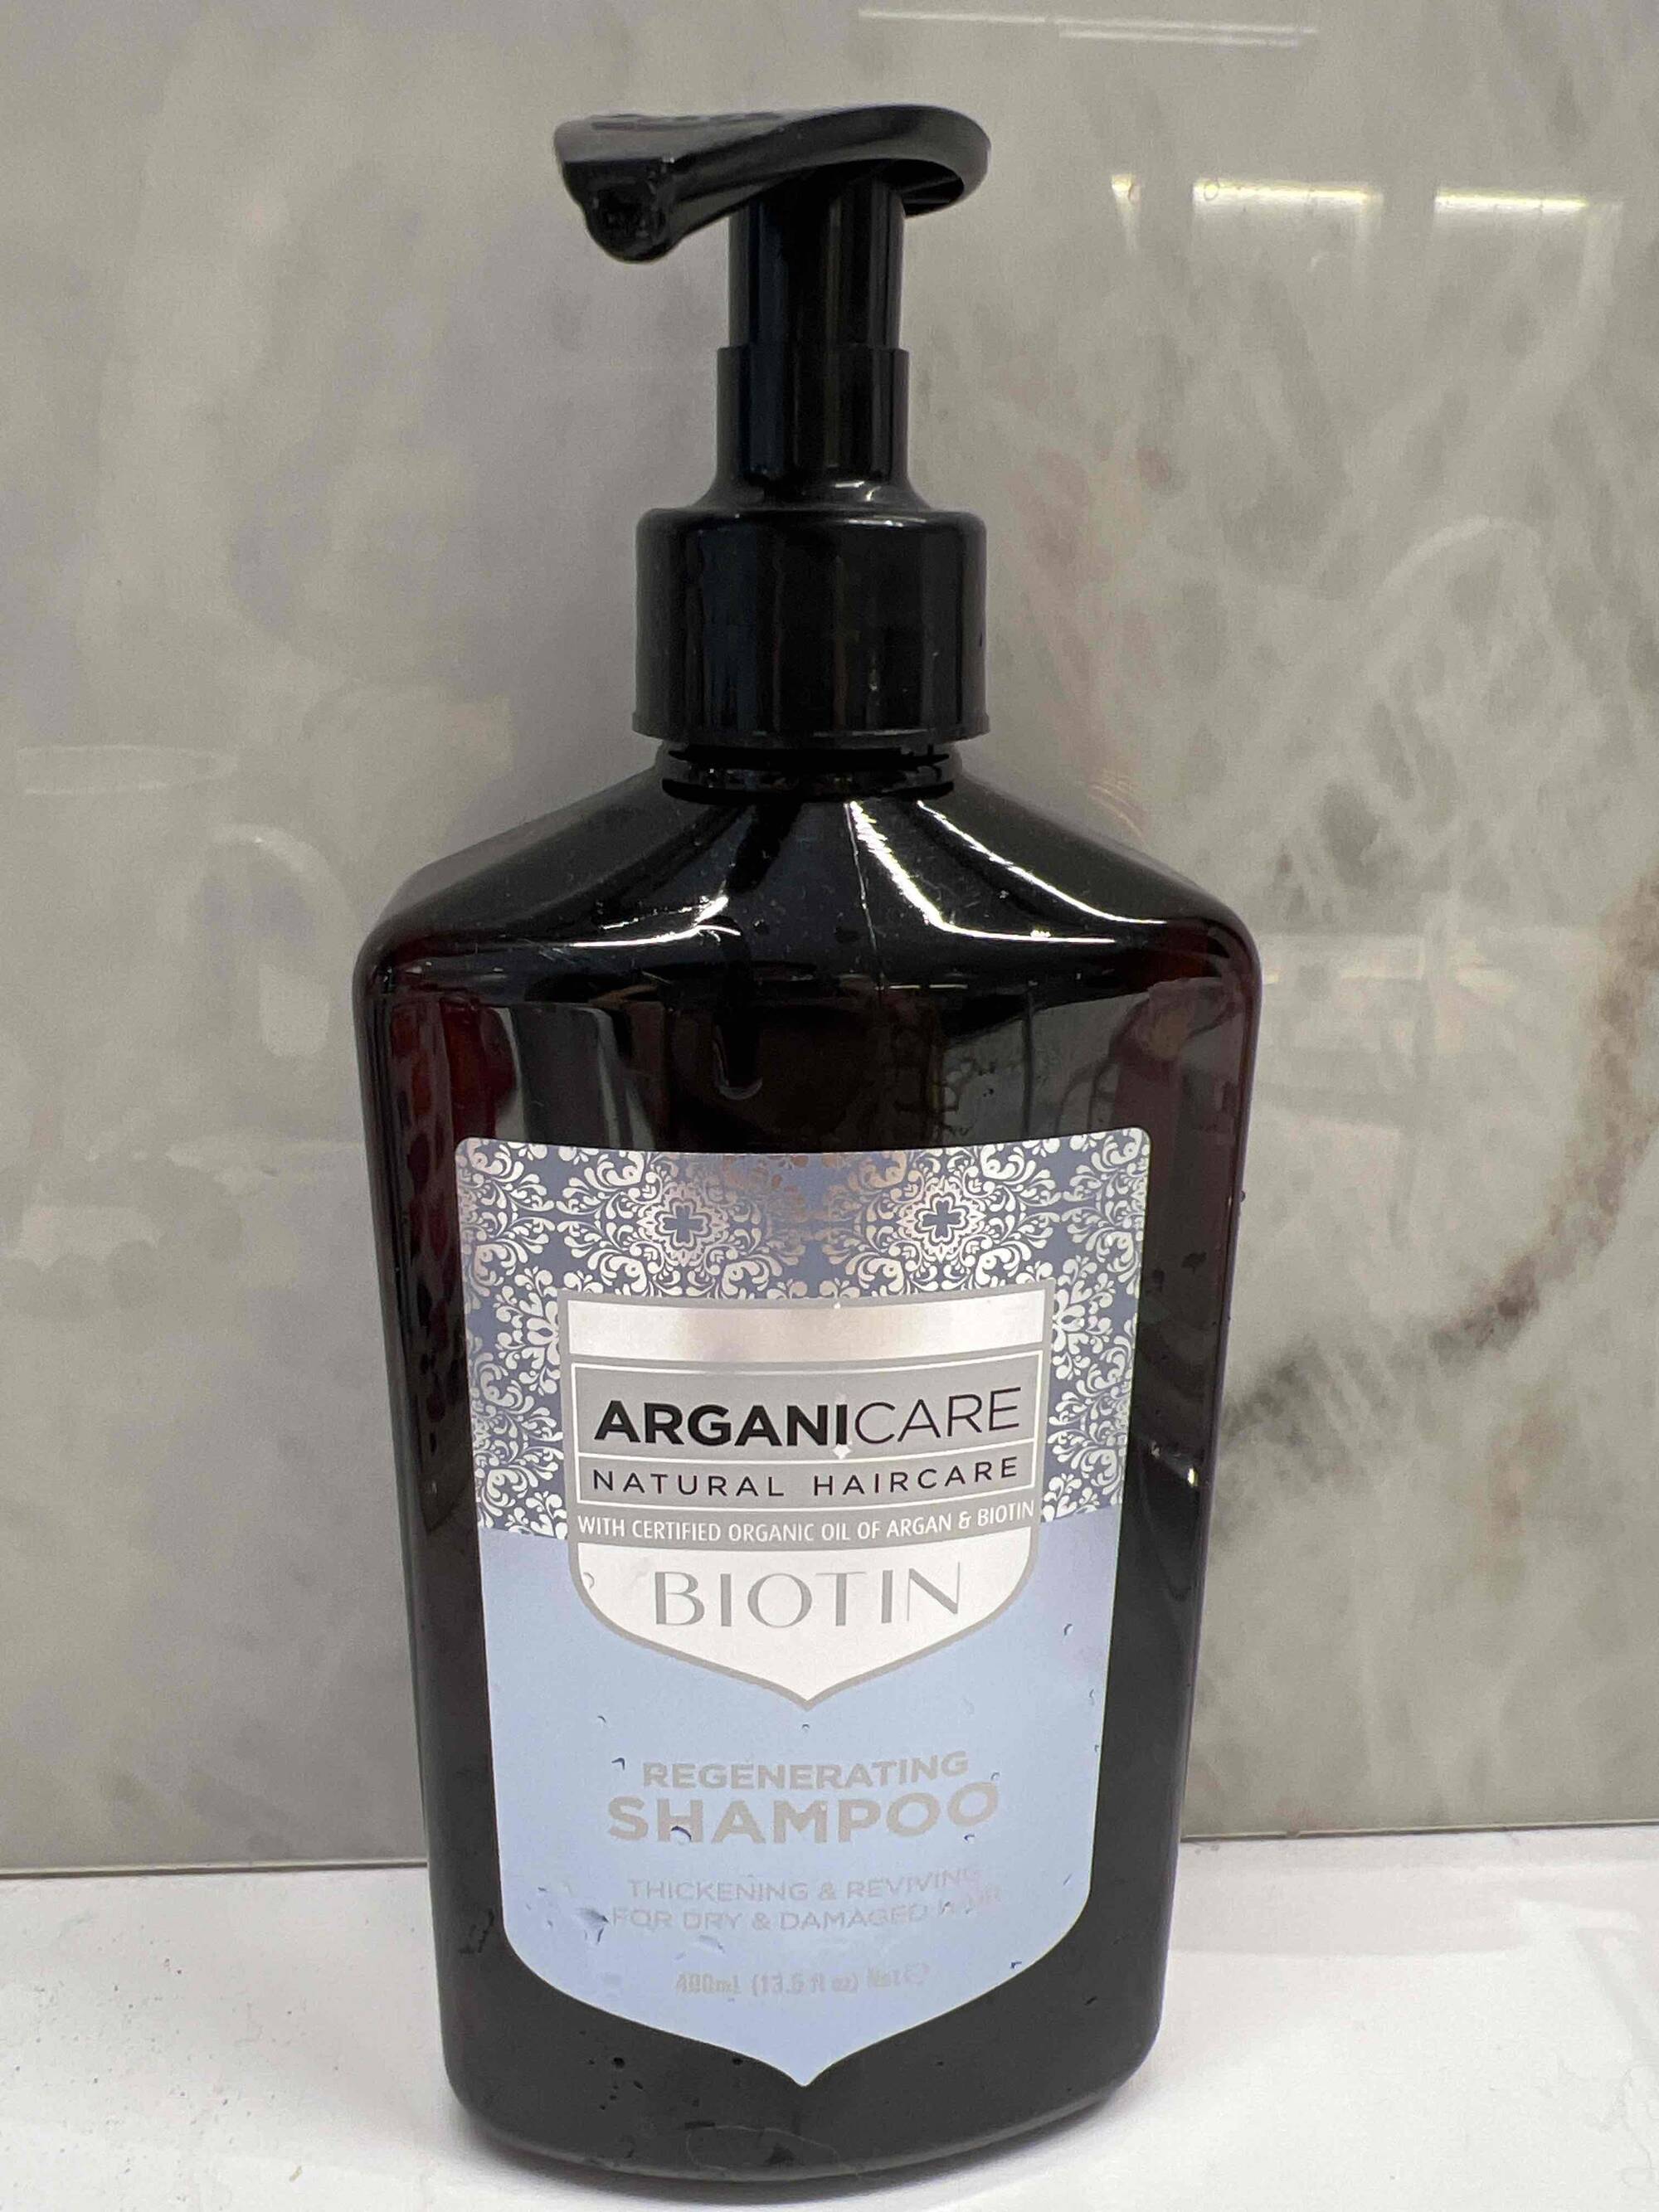 ARGANICARE - Biotin - Regenerating shampoo 